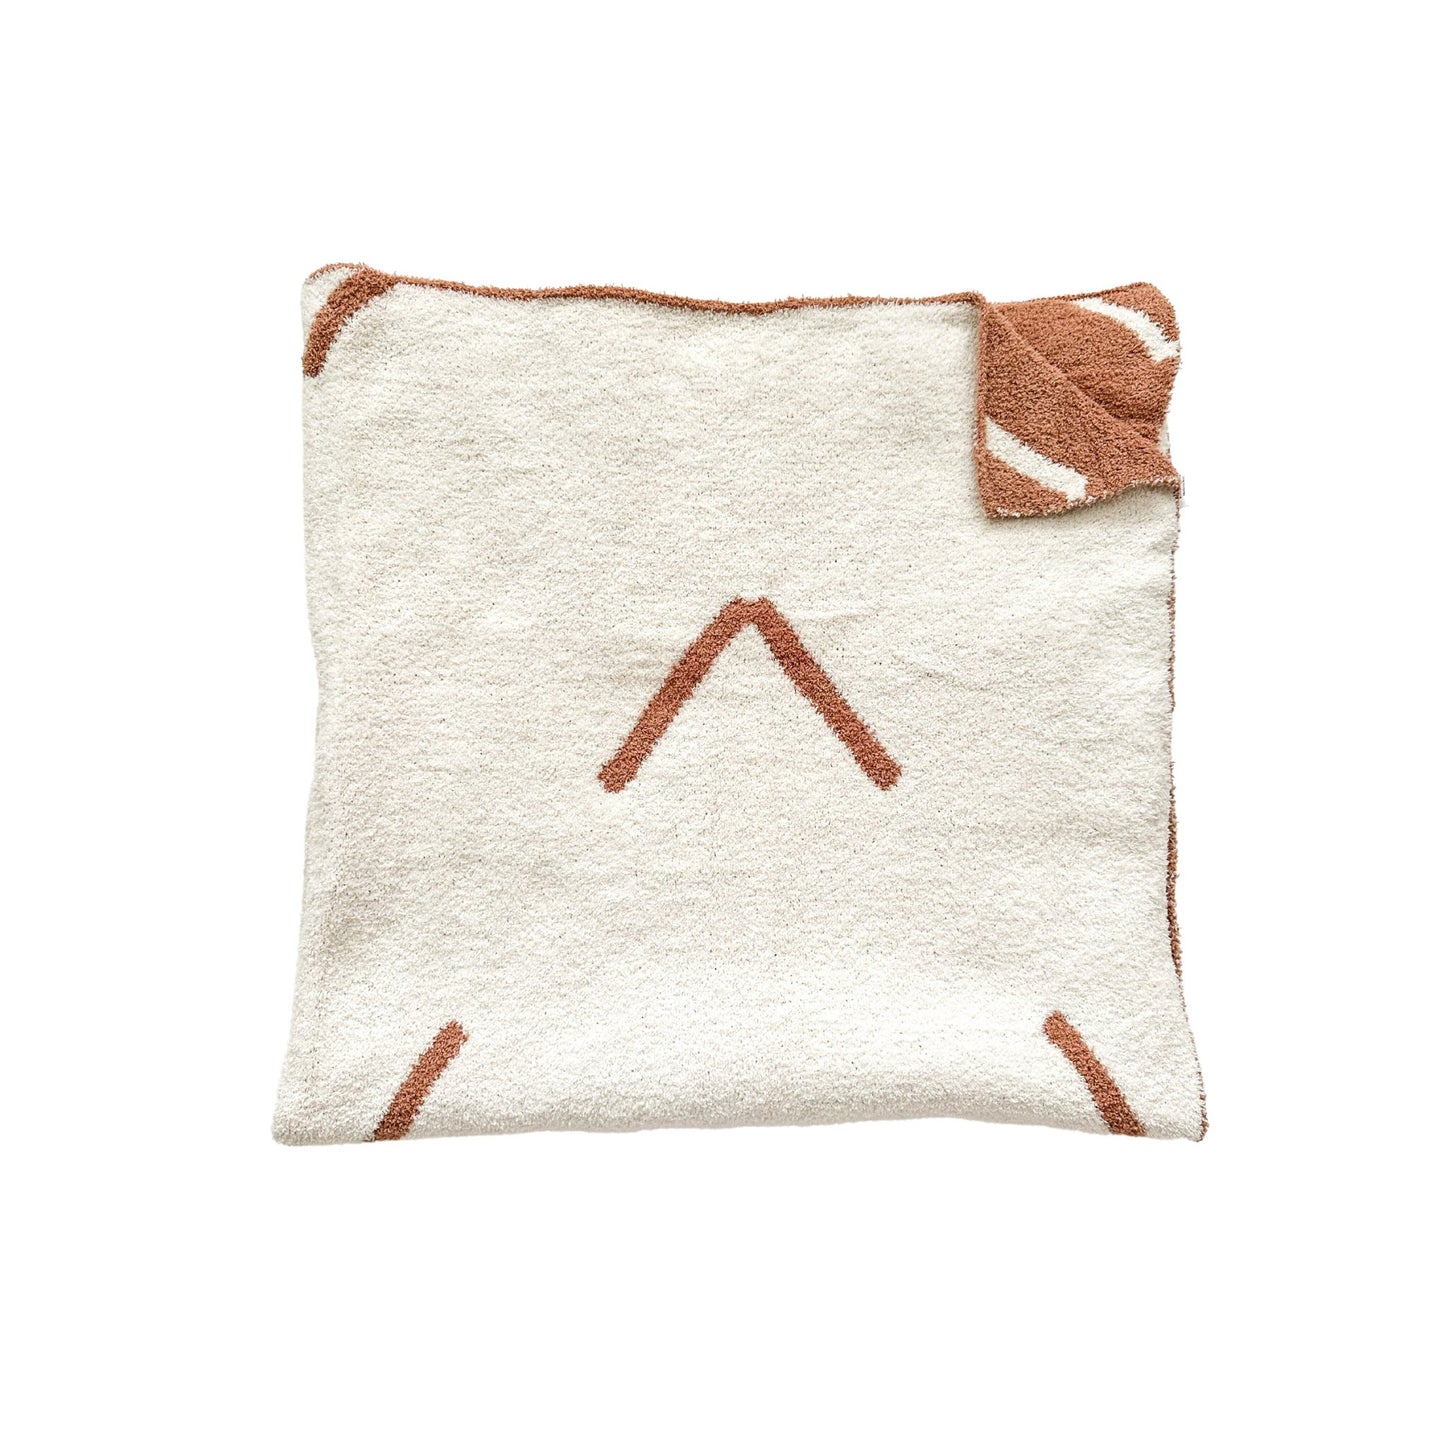 Arrow Blanket - Caramel/Cream - Harp Angel Boutique